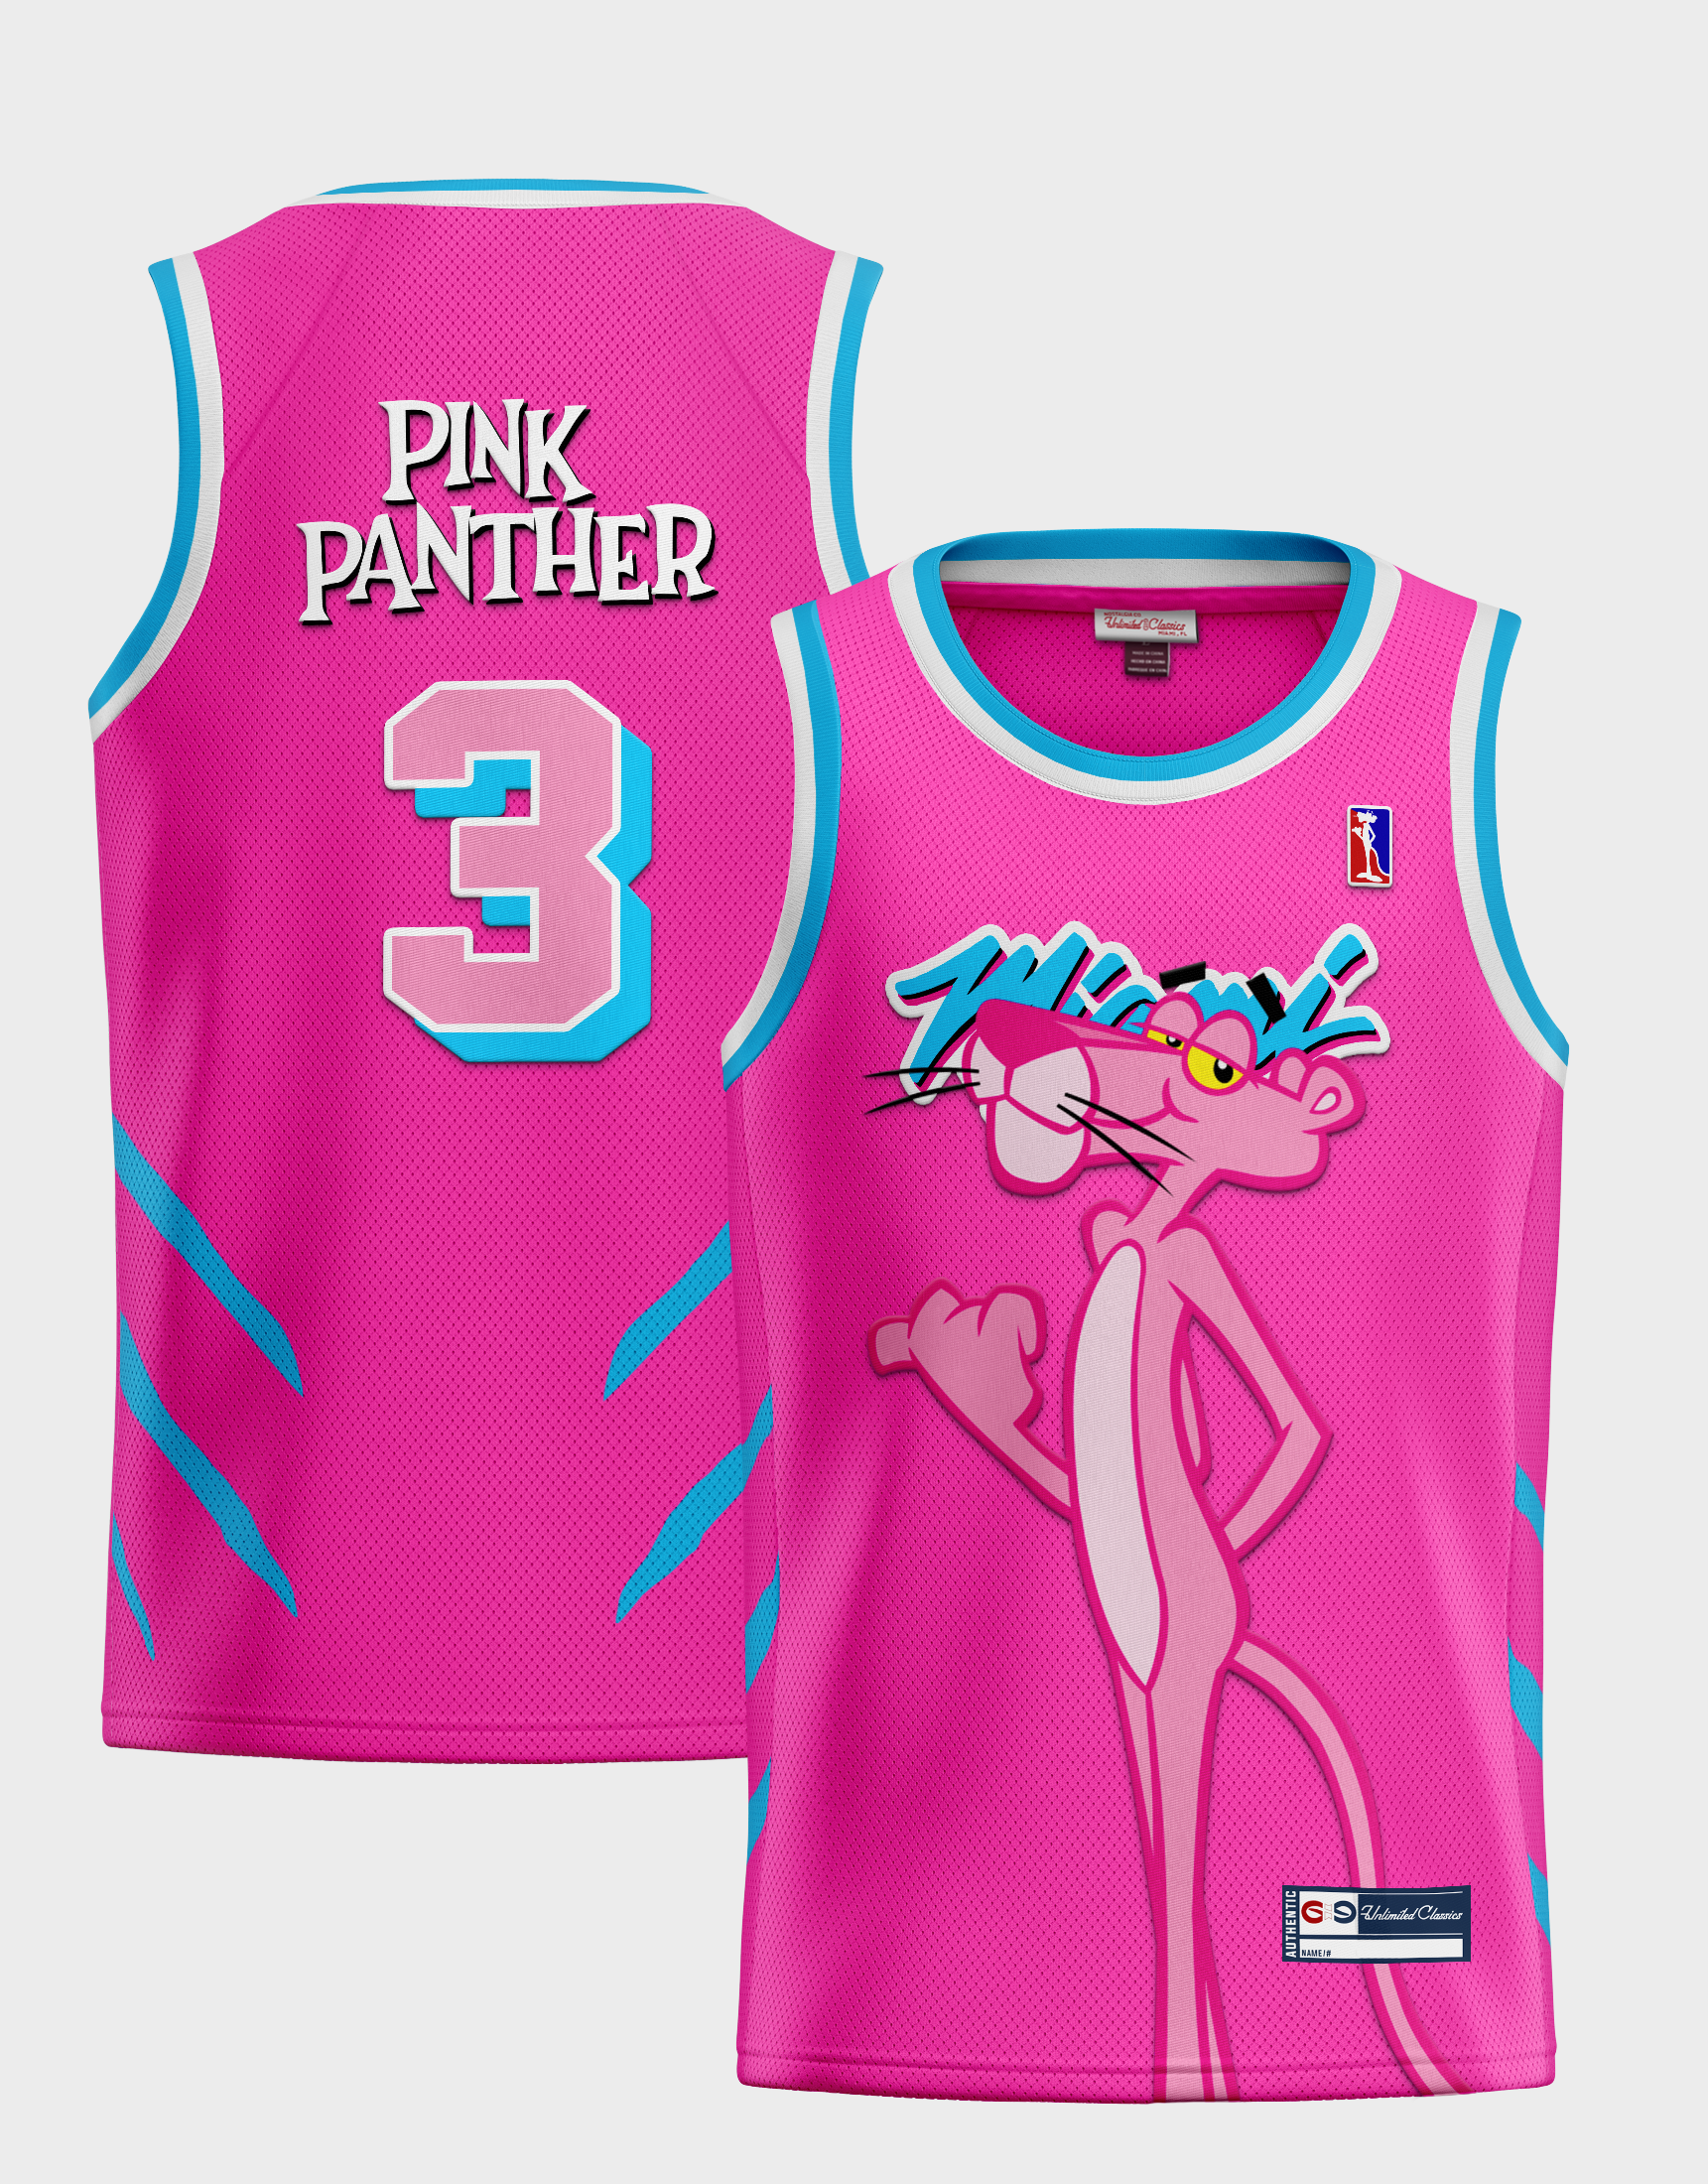 NEW Black Panther NBA Uniform Design 